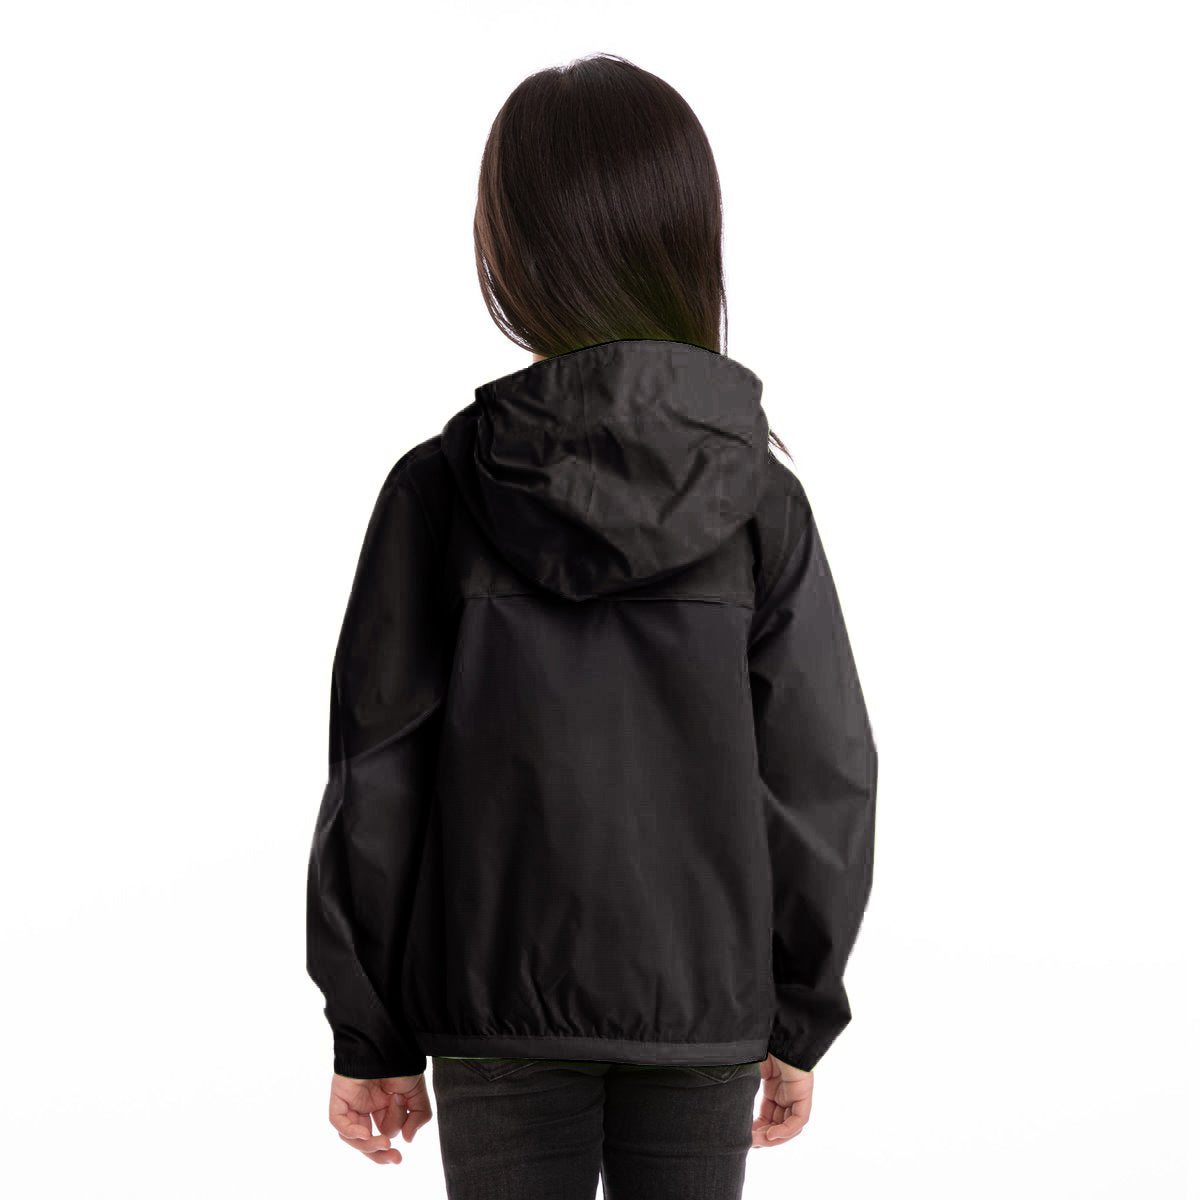 Claude - Kids Packable Full Zip Rain Jacket in Black